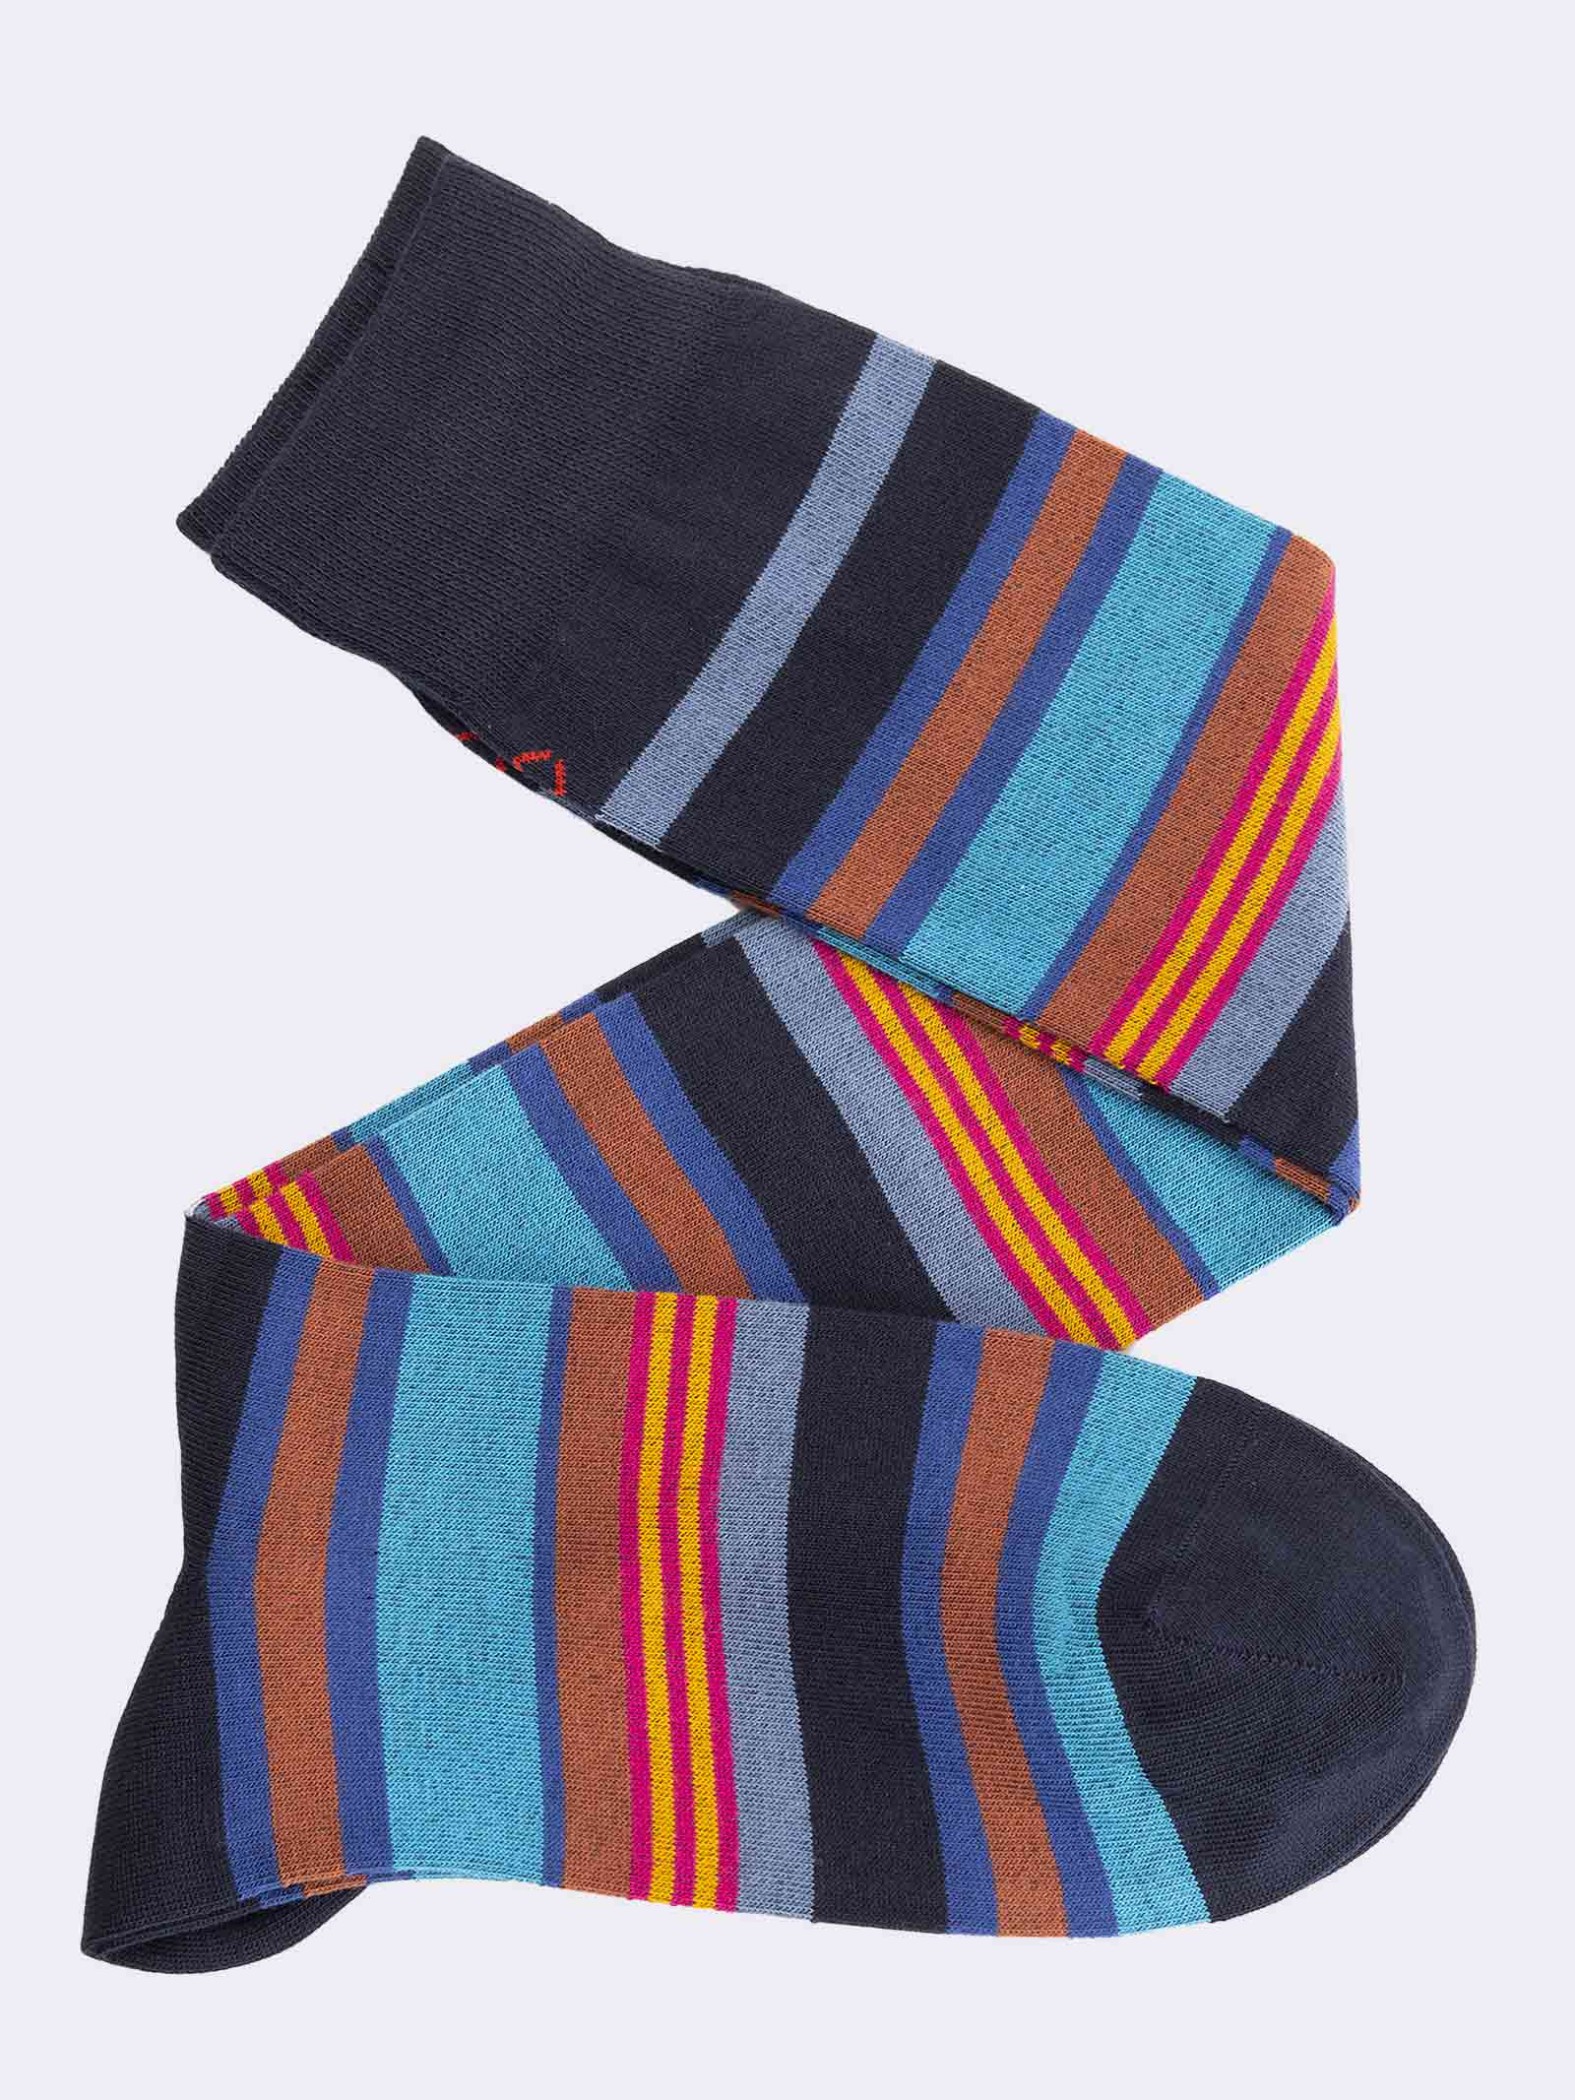 Men's patterned knee high socks in warm cotton bands